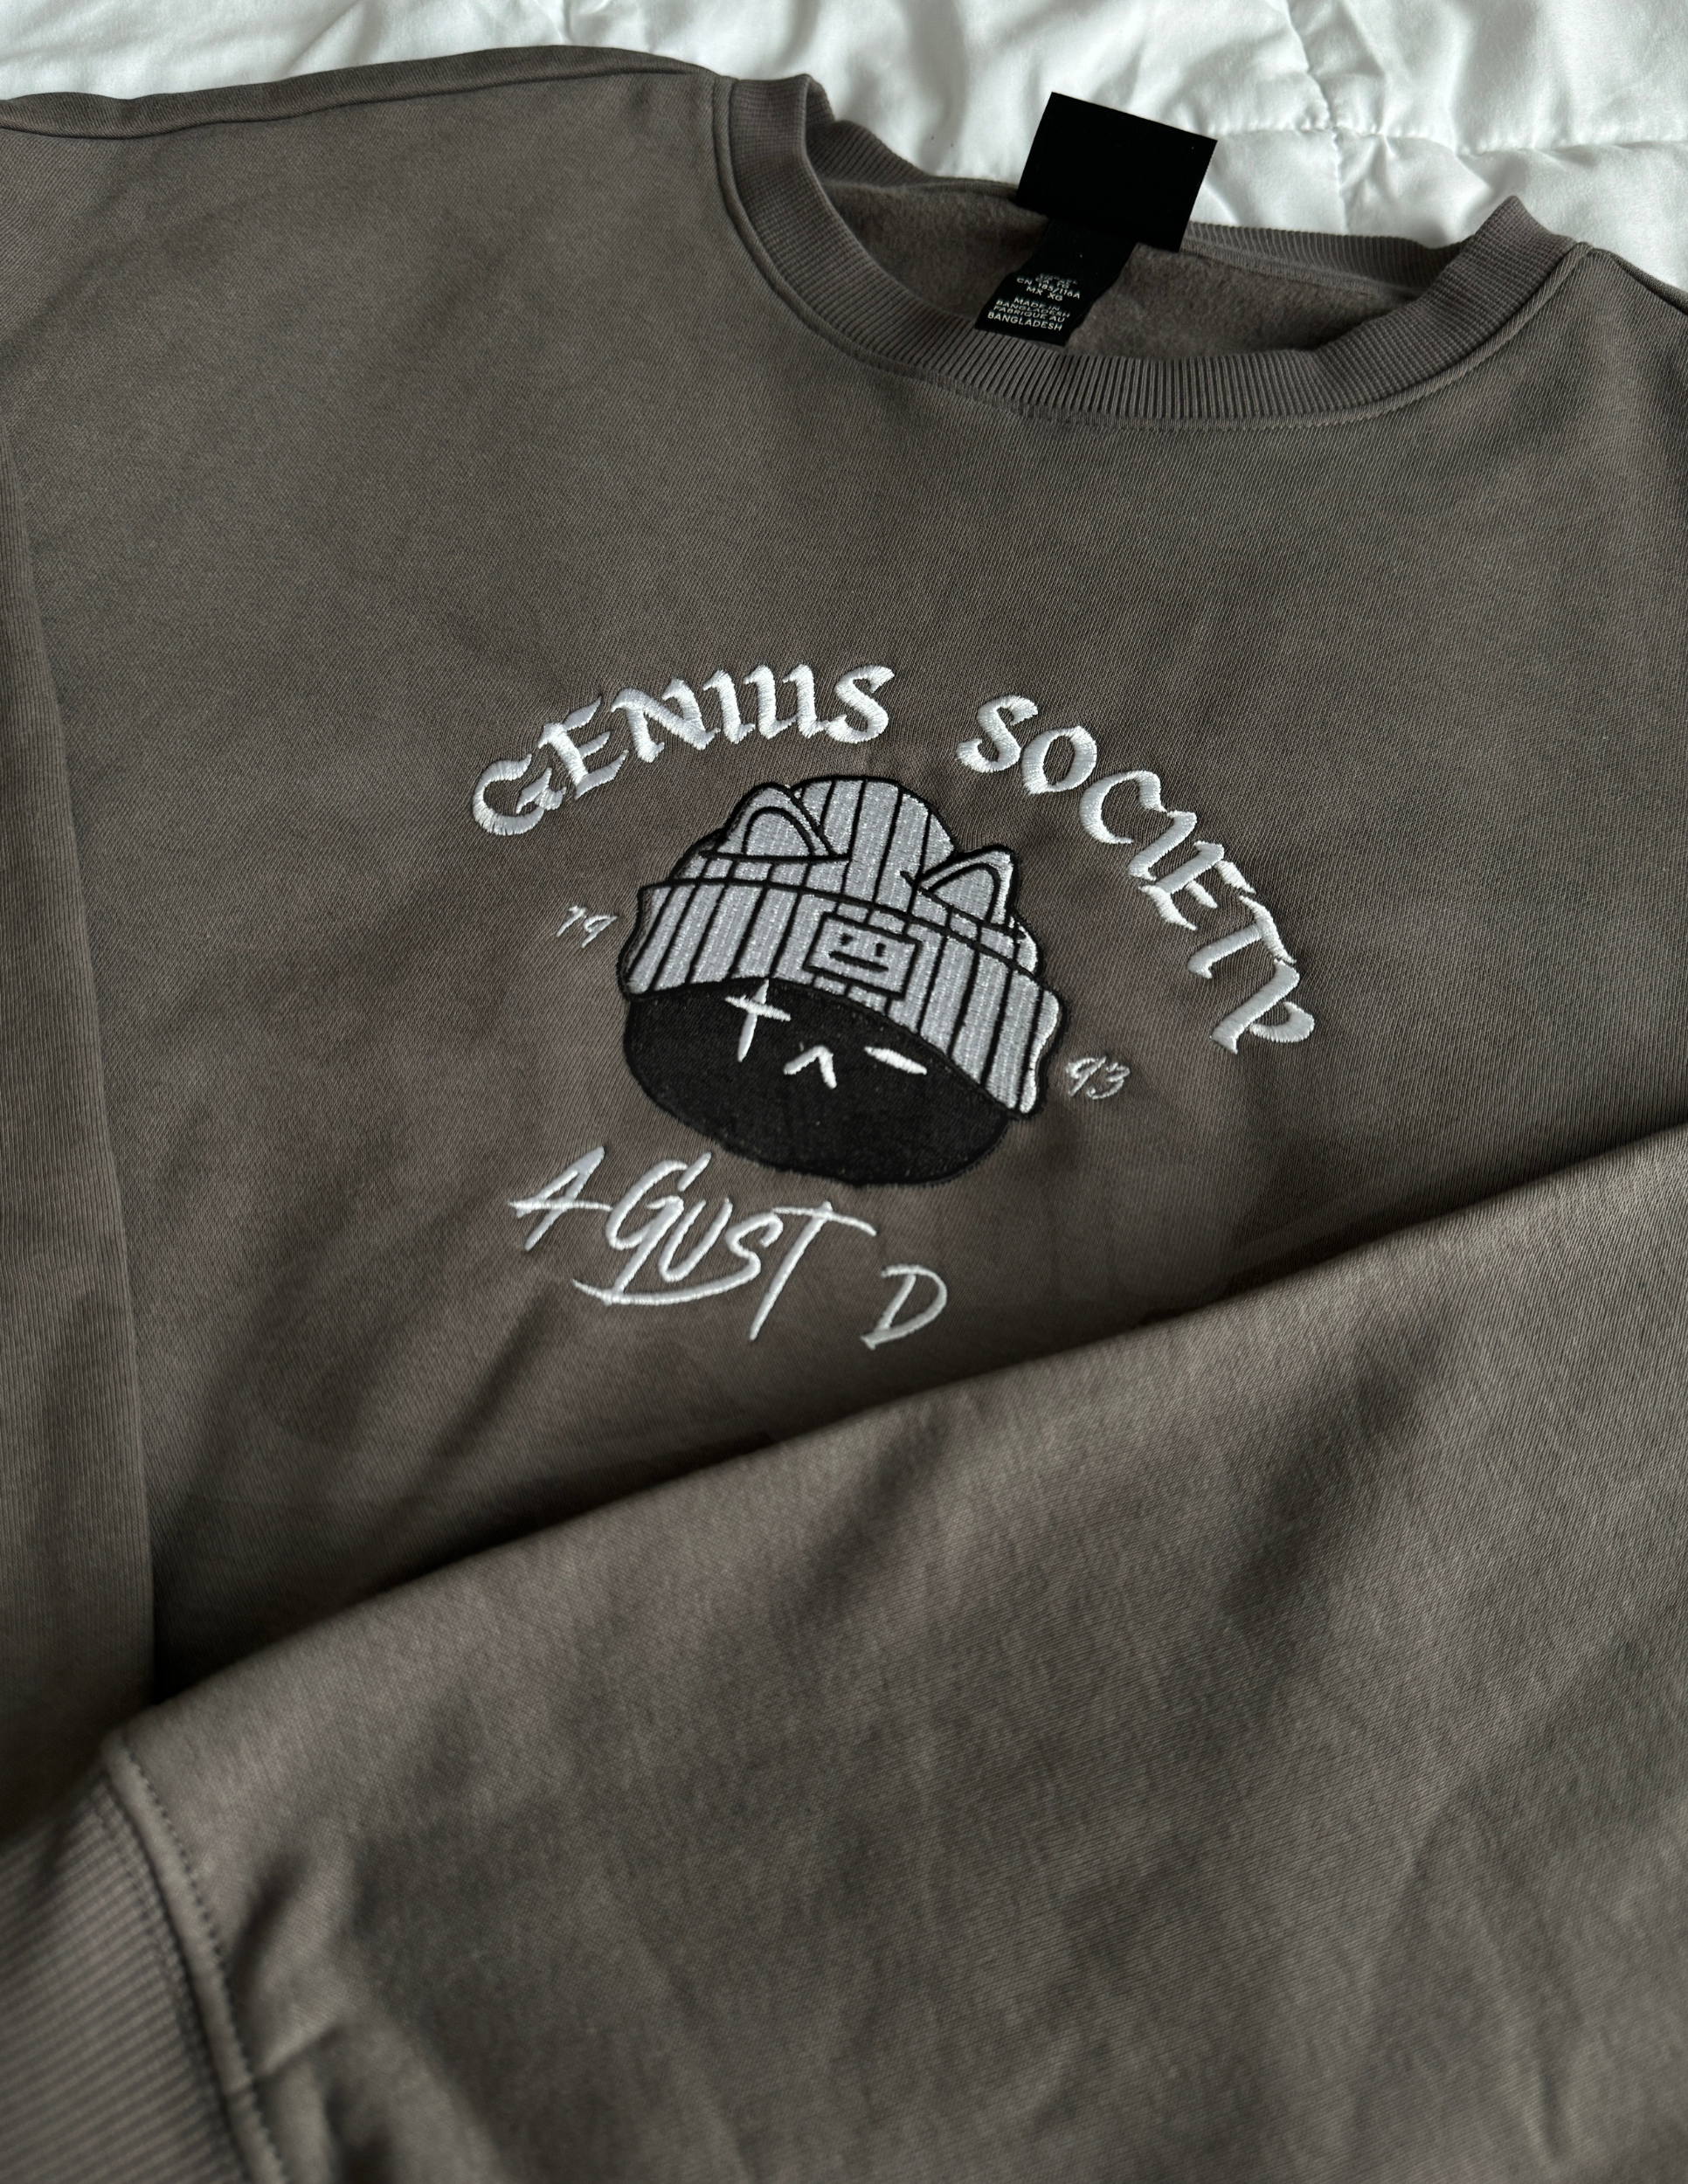 Genius Society Kitty Yoongi Embroidered Sweatshirt (1-2 Week Processing)